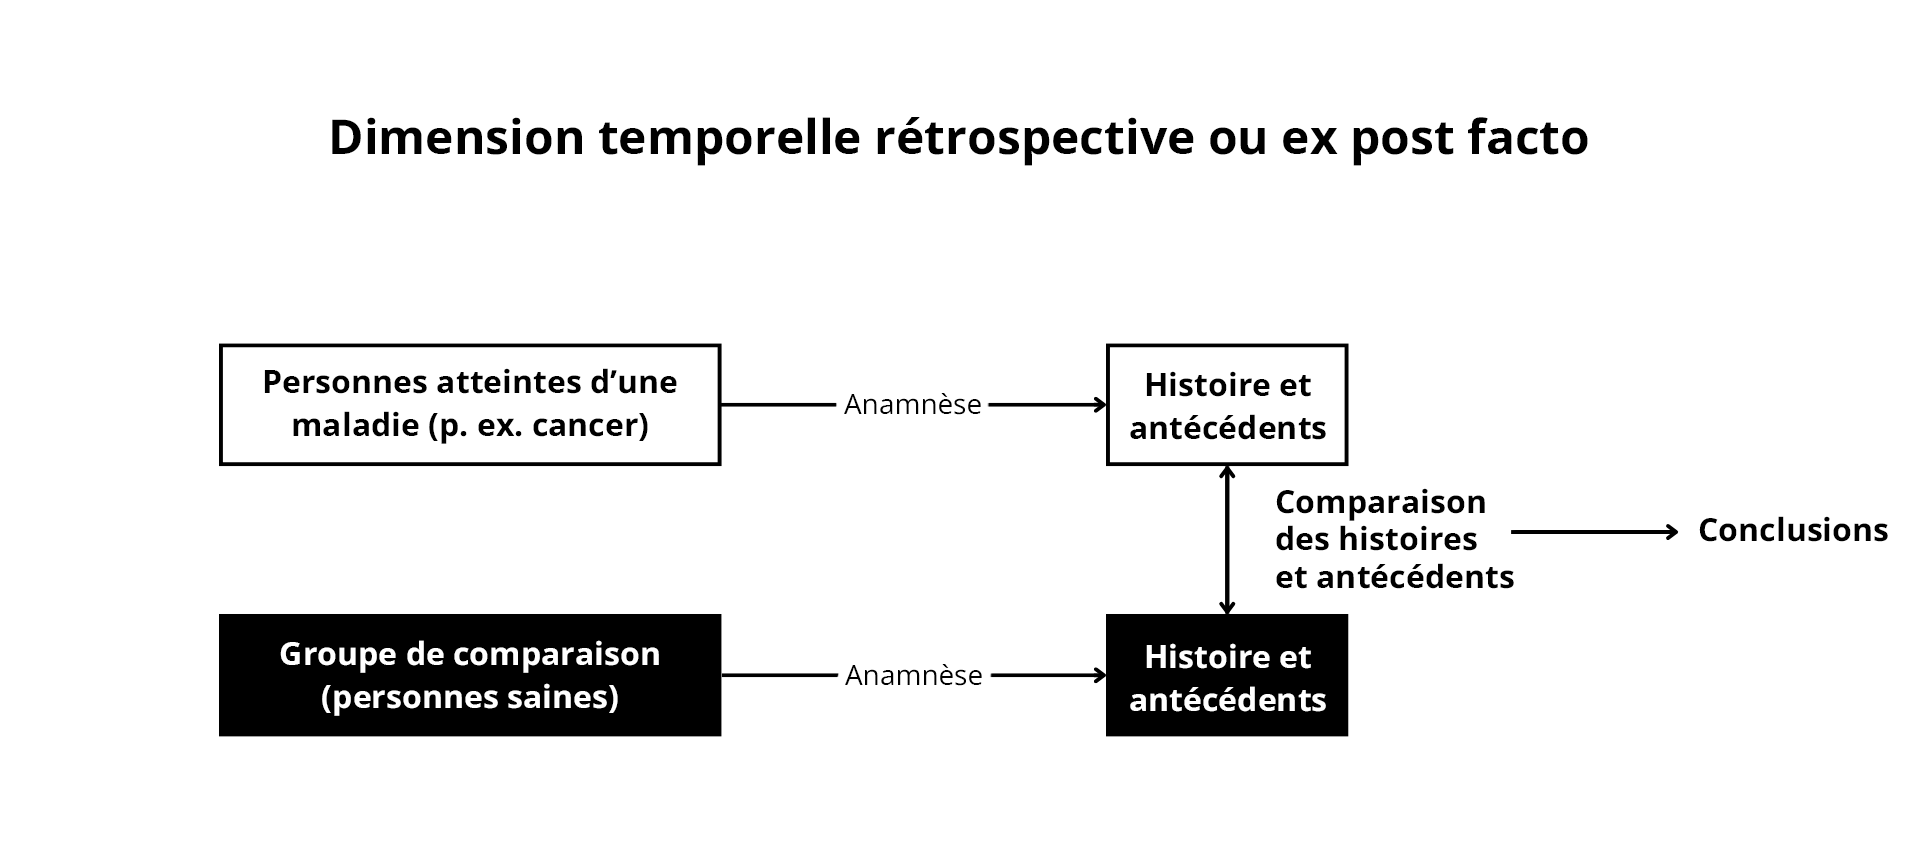 Figure 9. Études rétrospectives (ex post facto). Adaptation de https://hsl.lib.umn.edu/biomed/help/understanding-research-study-designs